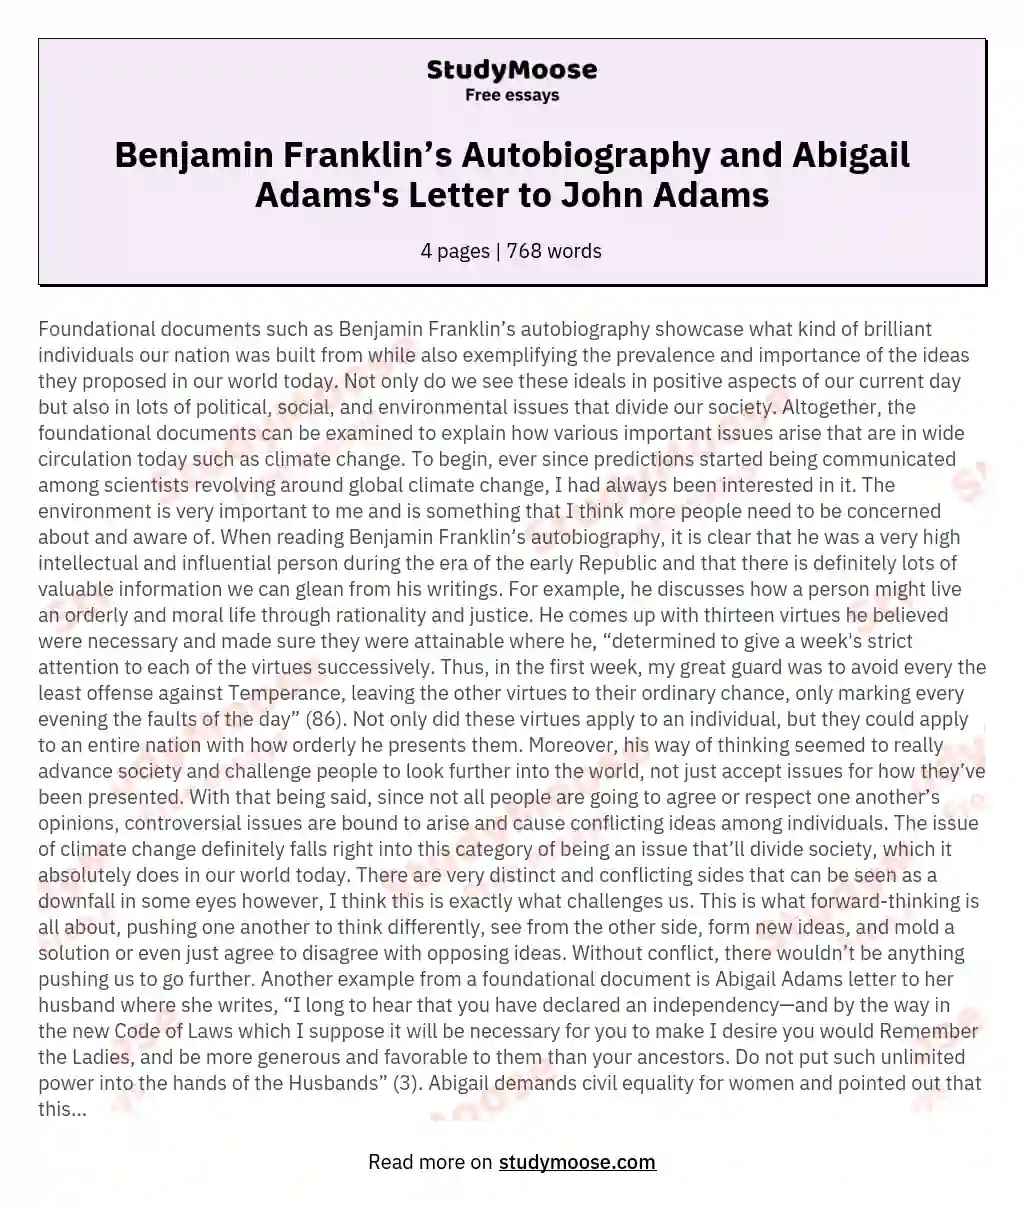 Benjamin Franklin’s Autobiography and Abigail Adams's Letter to John Adams essay